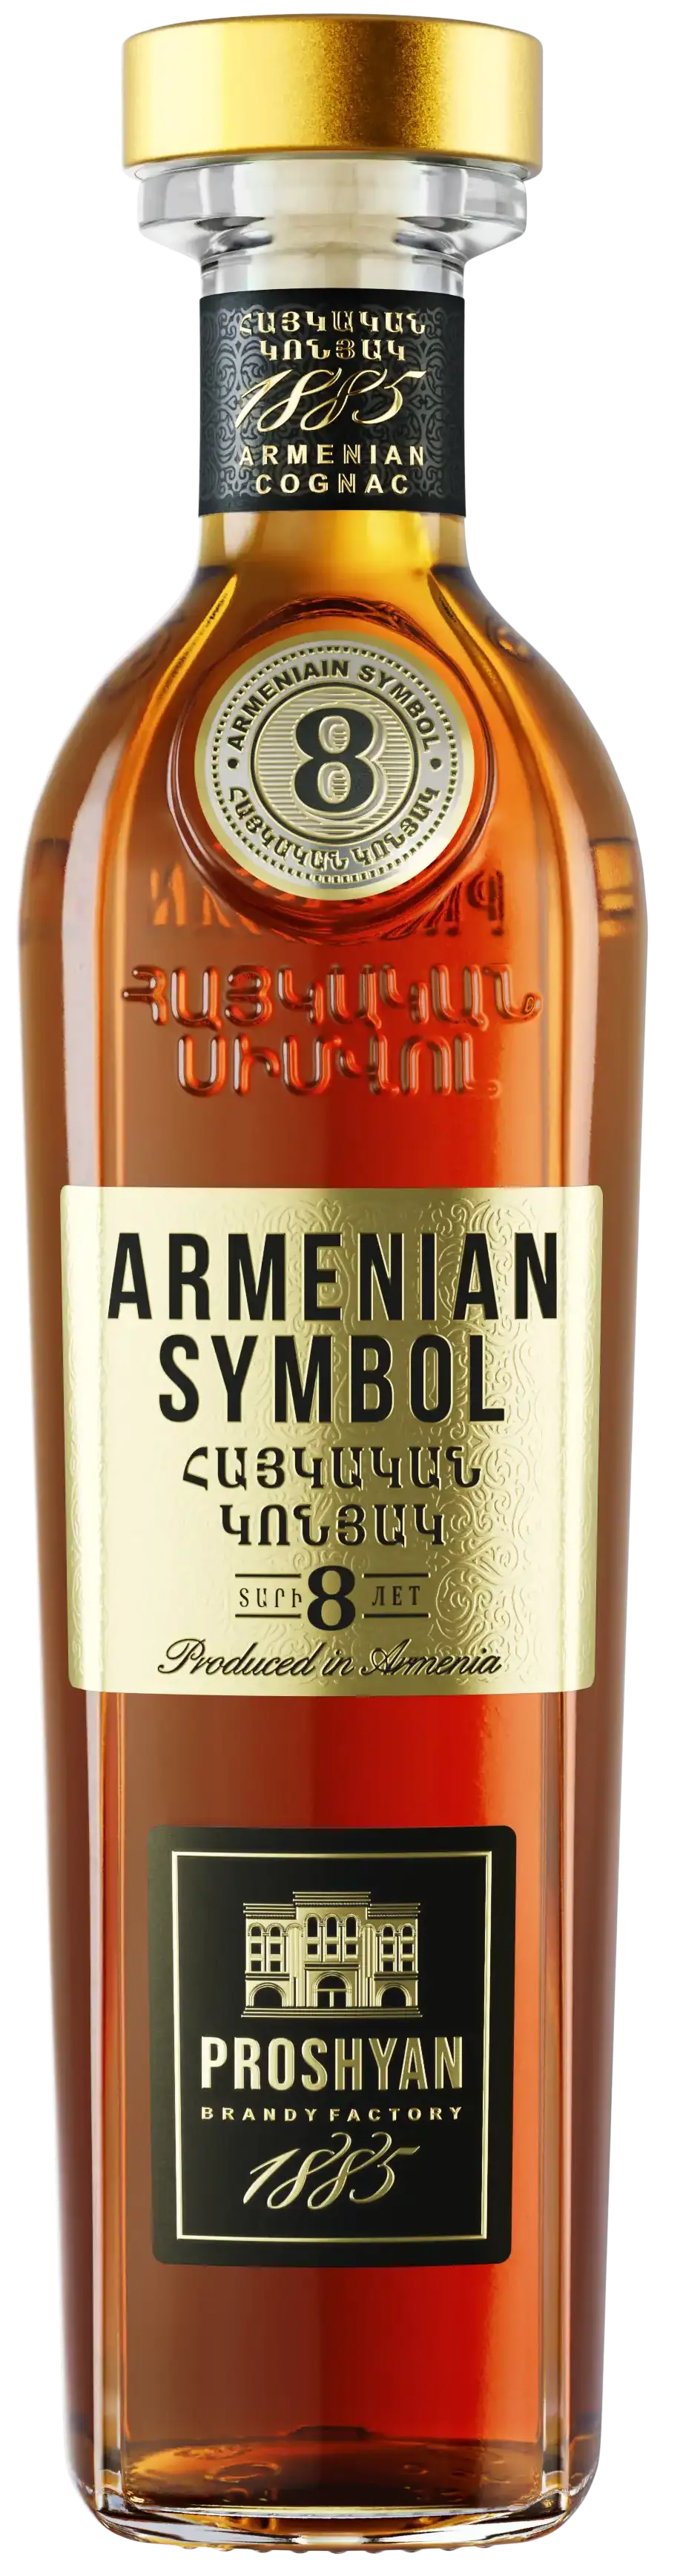 Армянский Символ 8 лет (Armenian Symbol 8 Years Old)